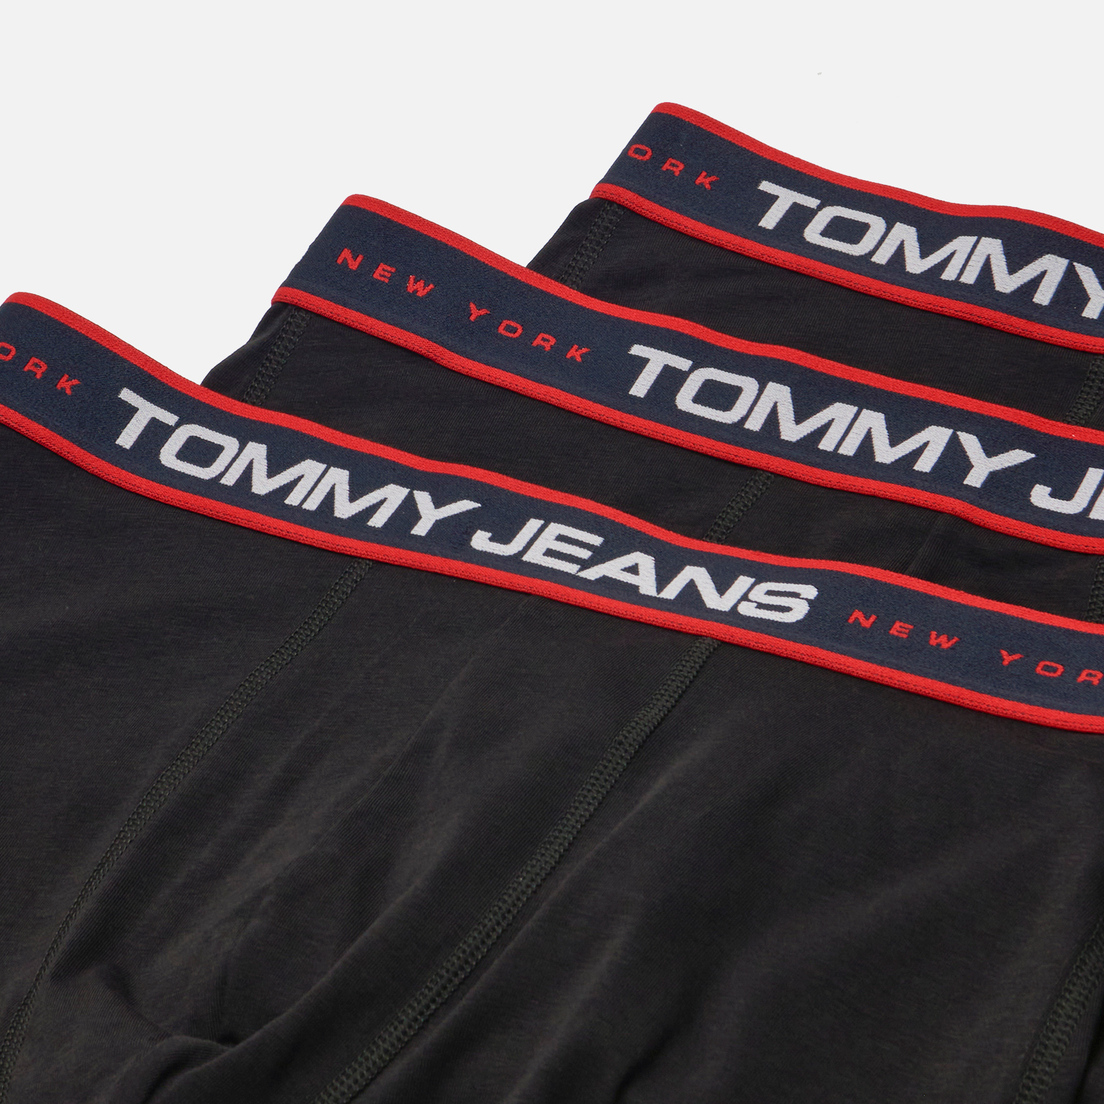 Tommy Hilfiger Underwear Комплект мужских трусов 3-Pack New York Logo Tape Trunks